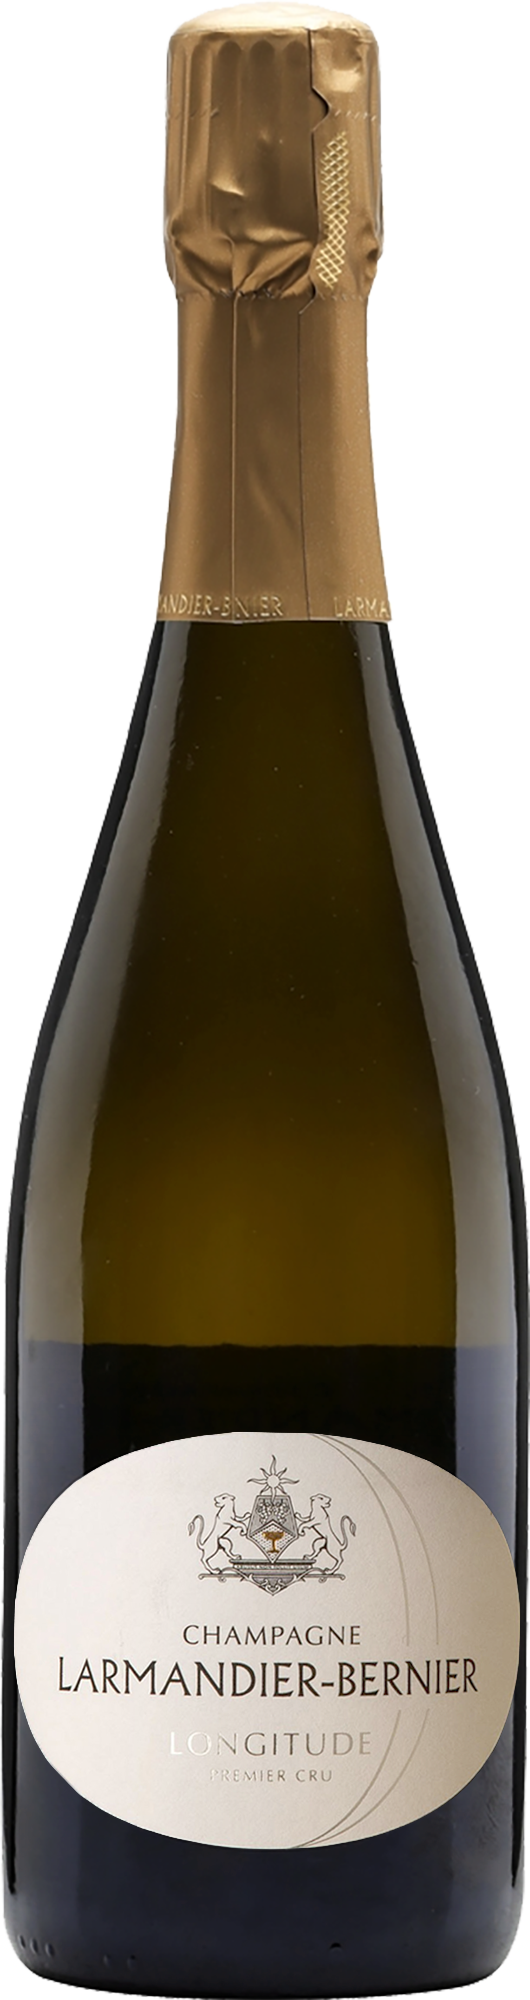 Champagne Larmandier-Bernier 1er Cru Longitude Blanc de Blancs NV (Base 19 Disg. Dec 2021)